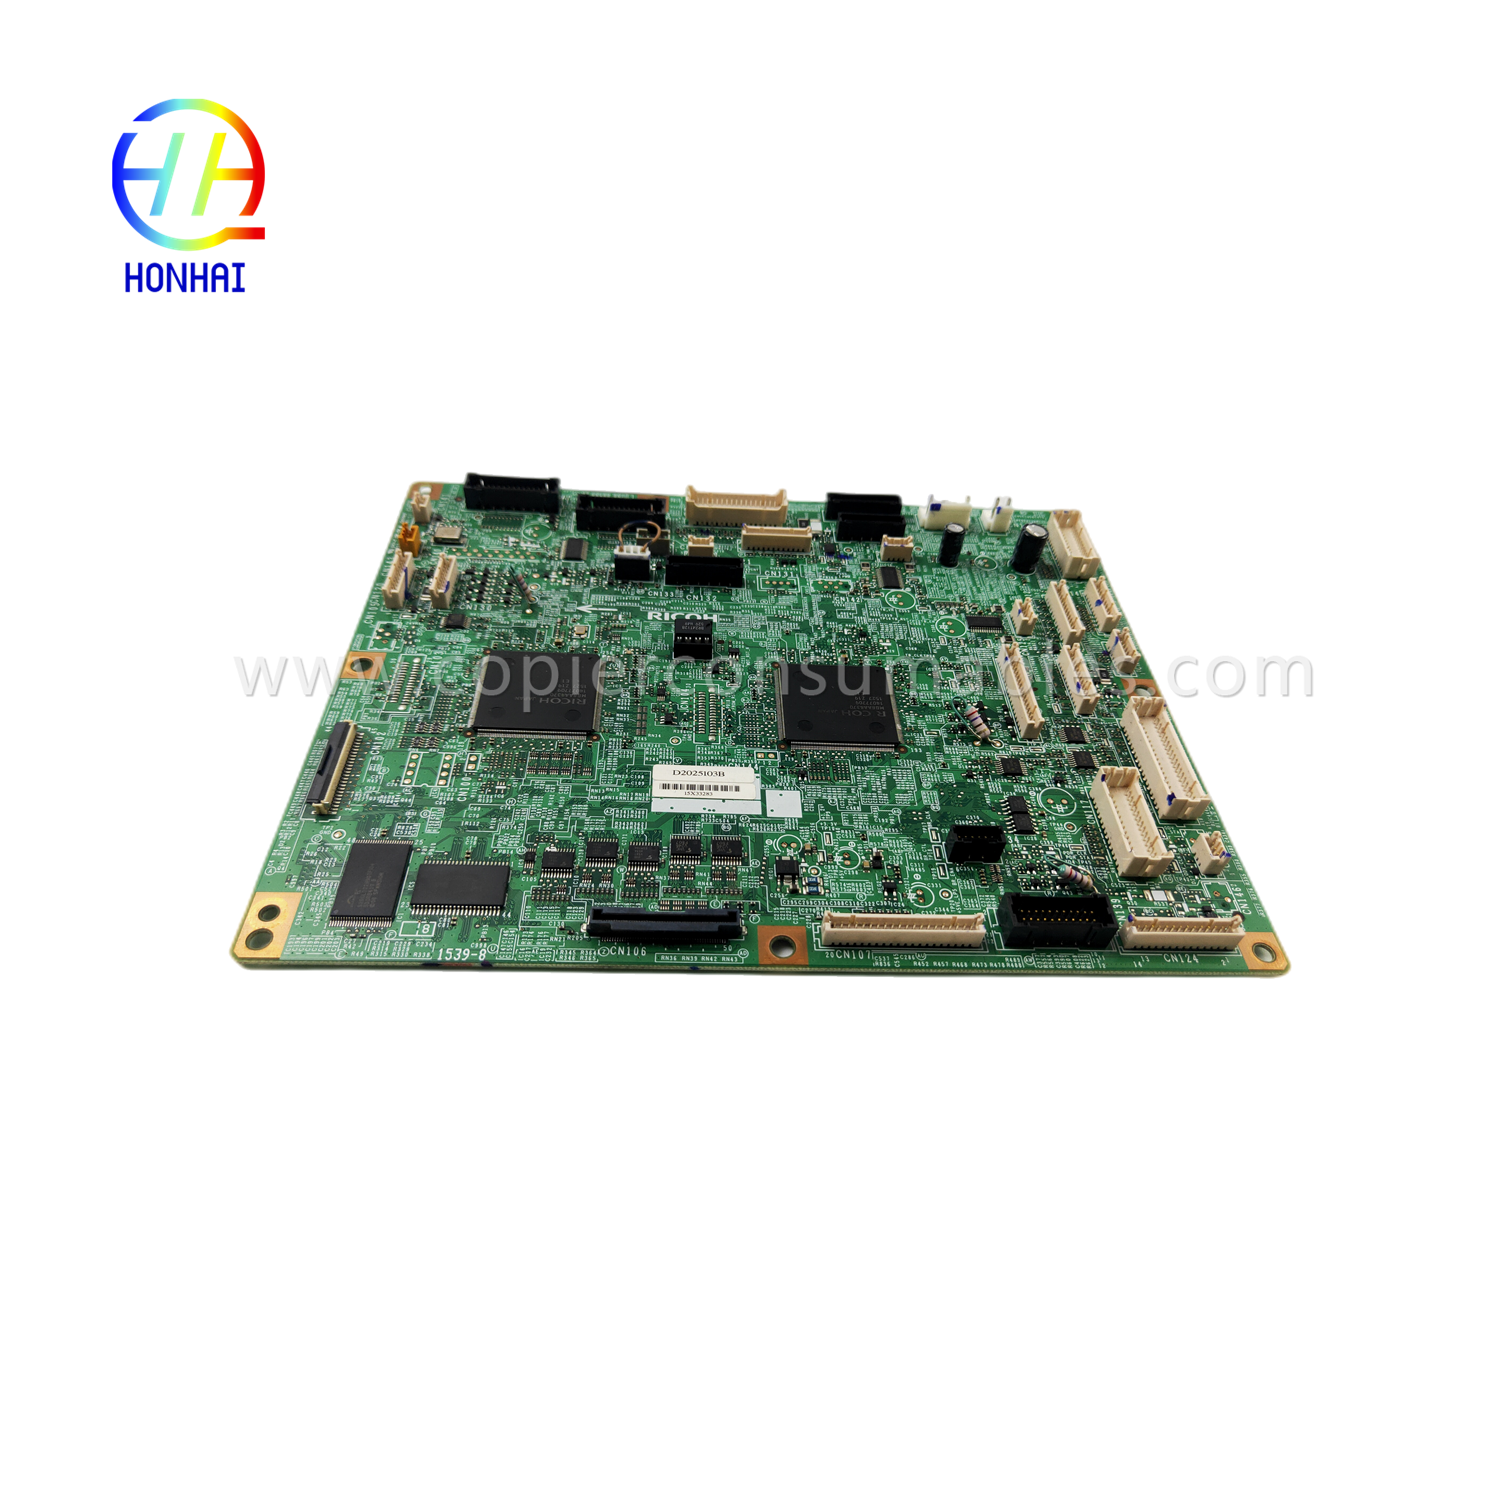 https://c585.goodao.net/bicu-board-for-ricoh-3045-3035-lanier-ld235-ld245-savin-4035-4045-bicu-board-assembly-product/